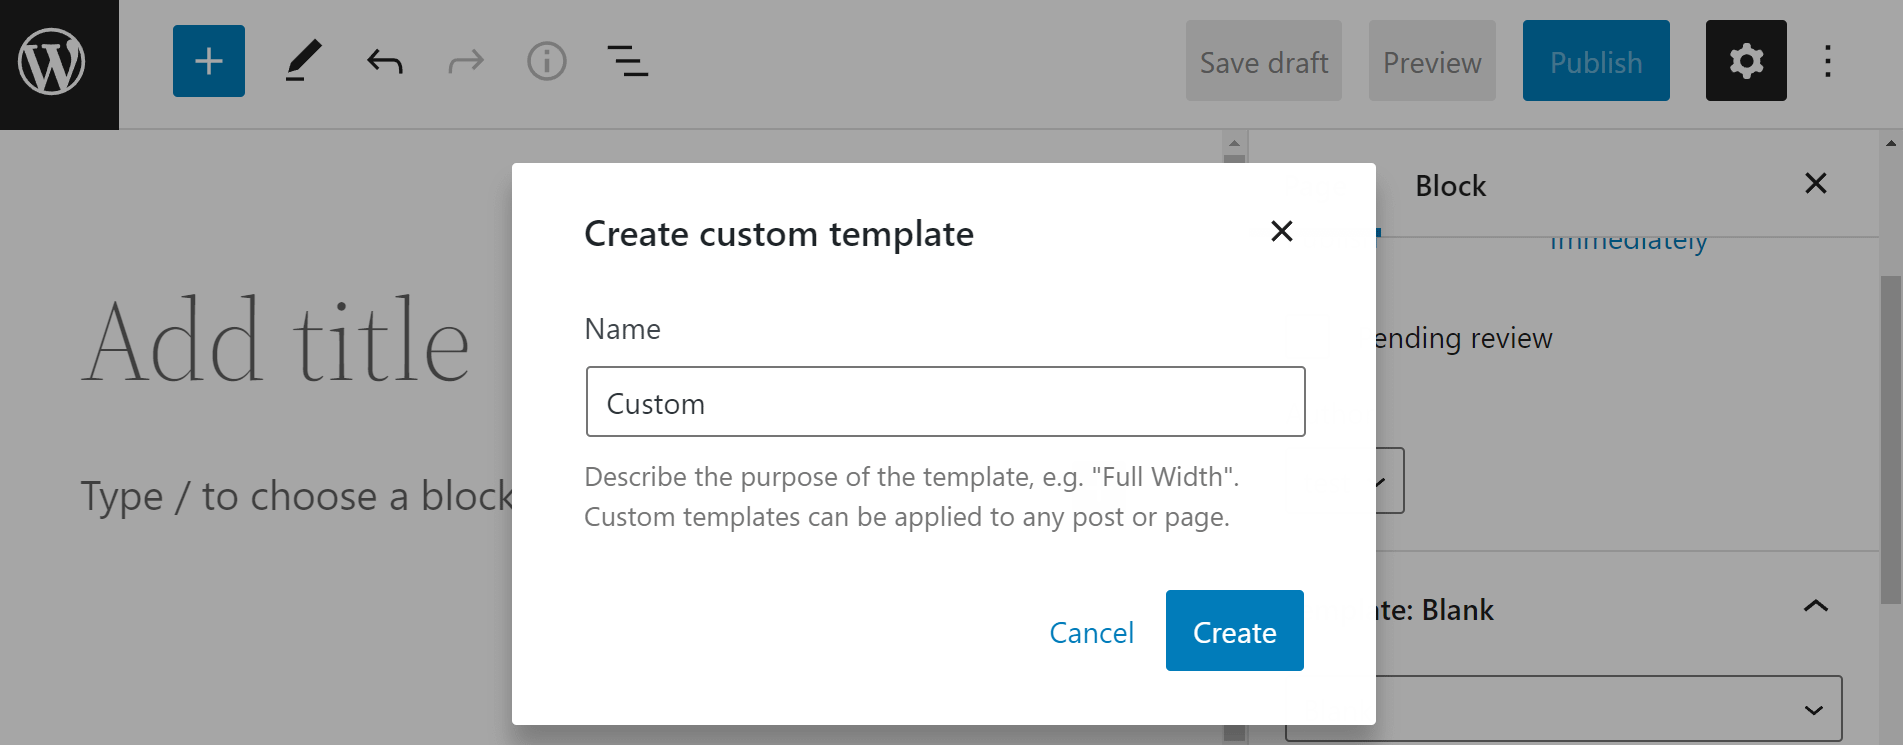 Creating a Custom template in WordPress. 